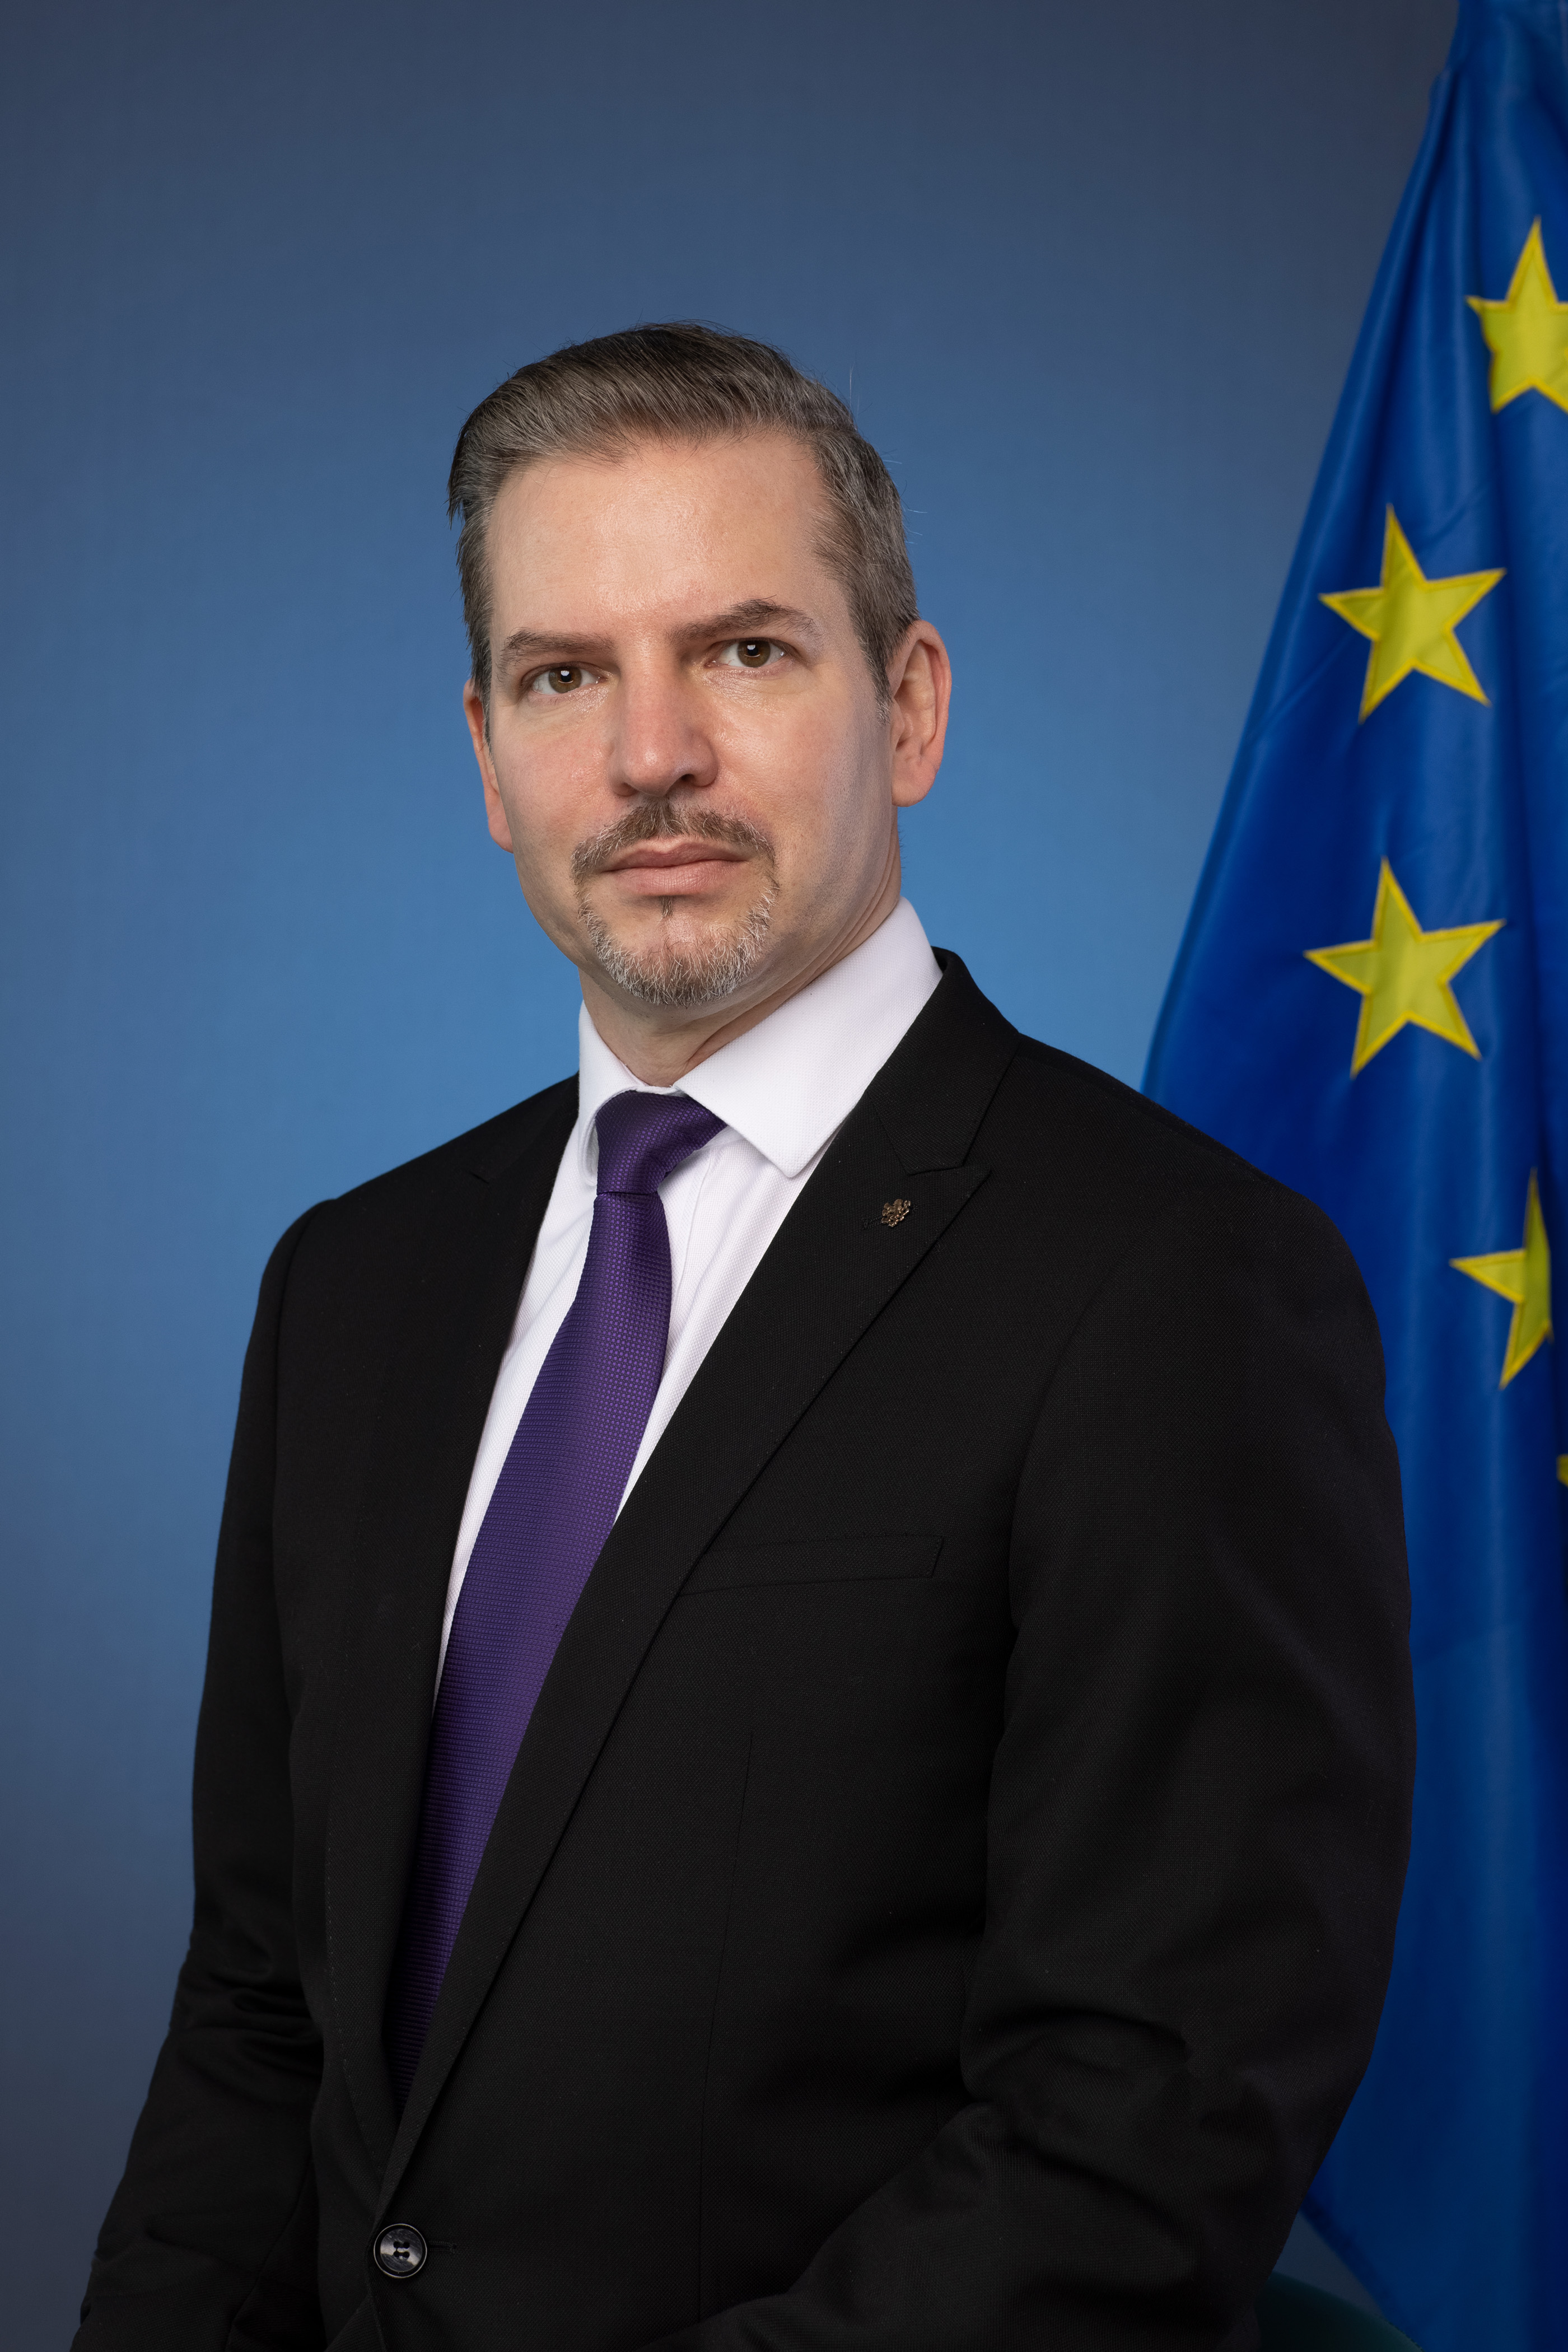 Photograph of European Prosecutor for Czechia Petr Klement